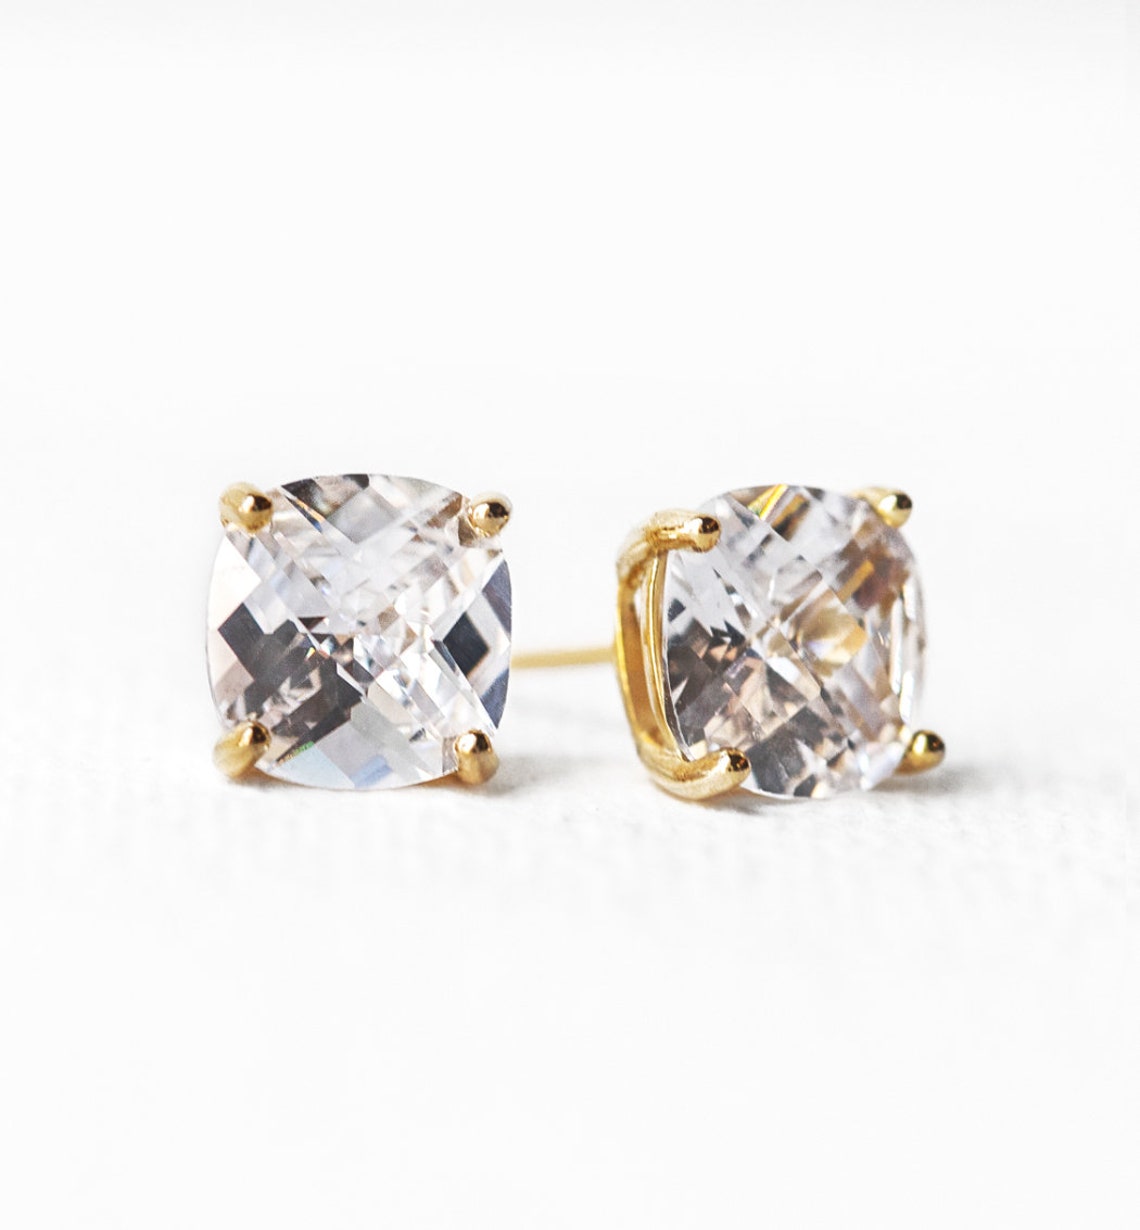 Wedding Earrings Stud Earrings Bridal Jewelry Crystal | Etsy